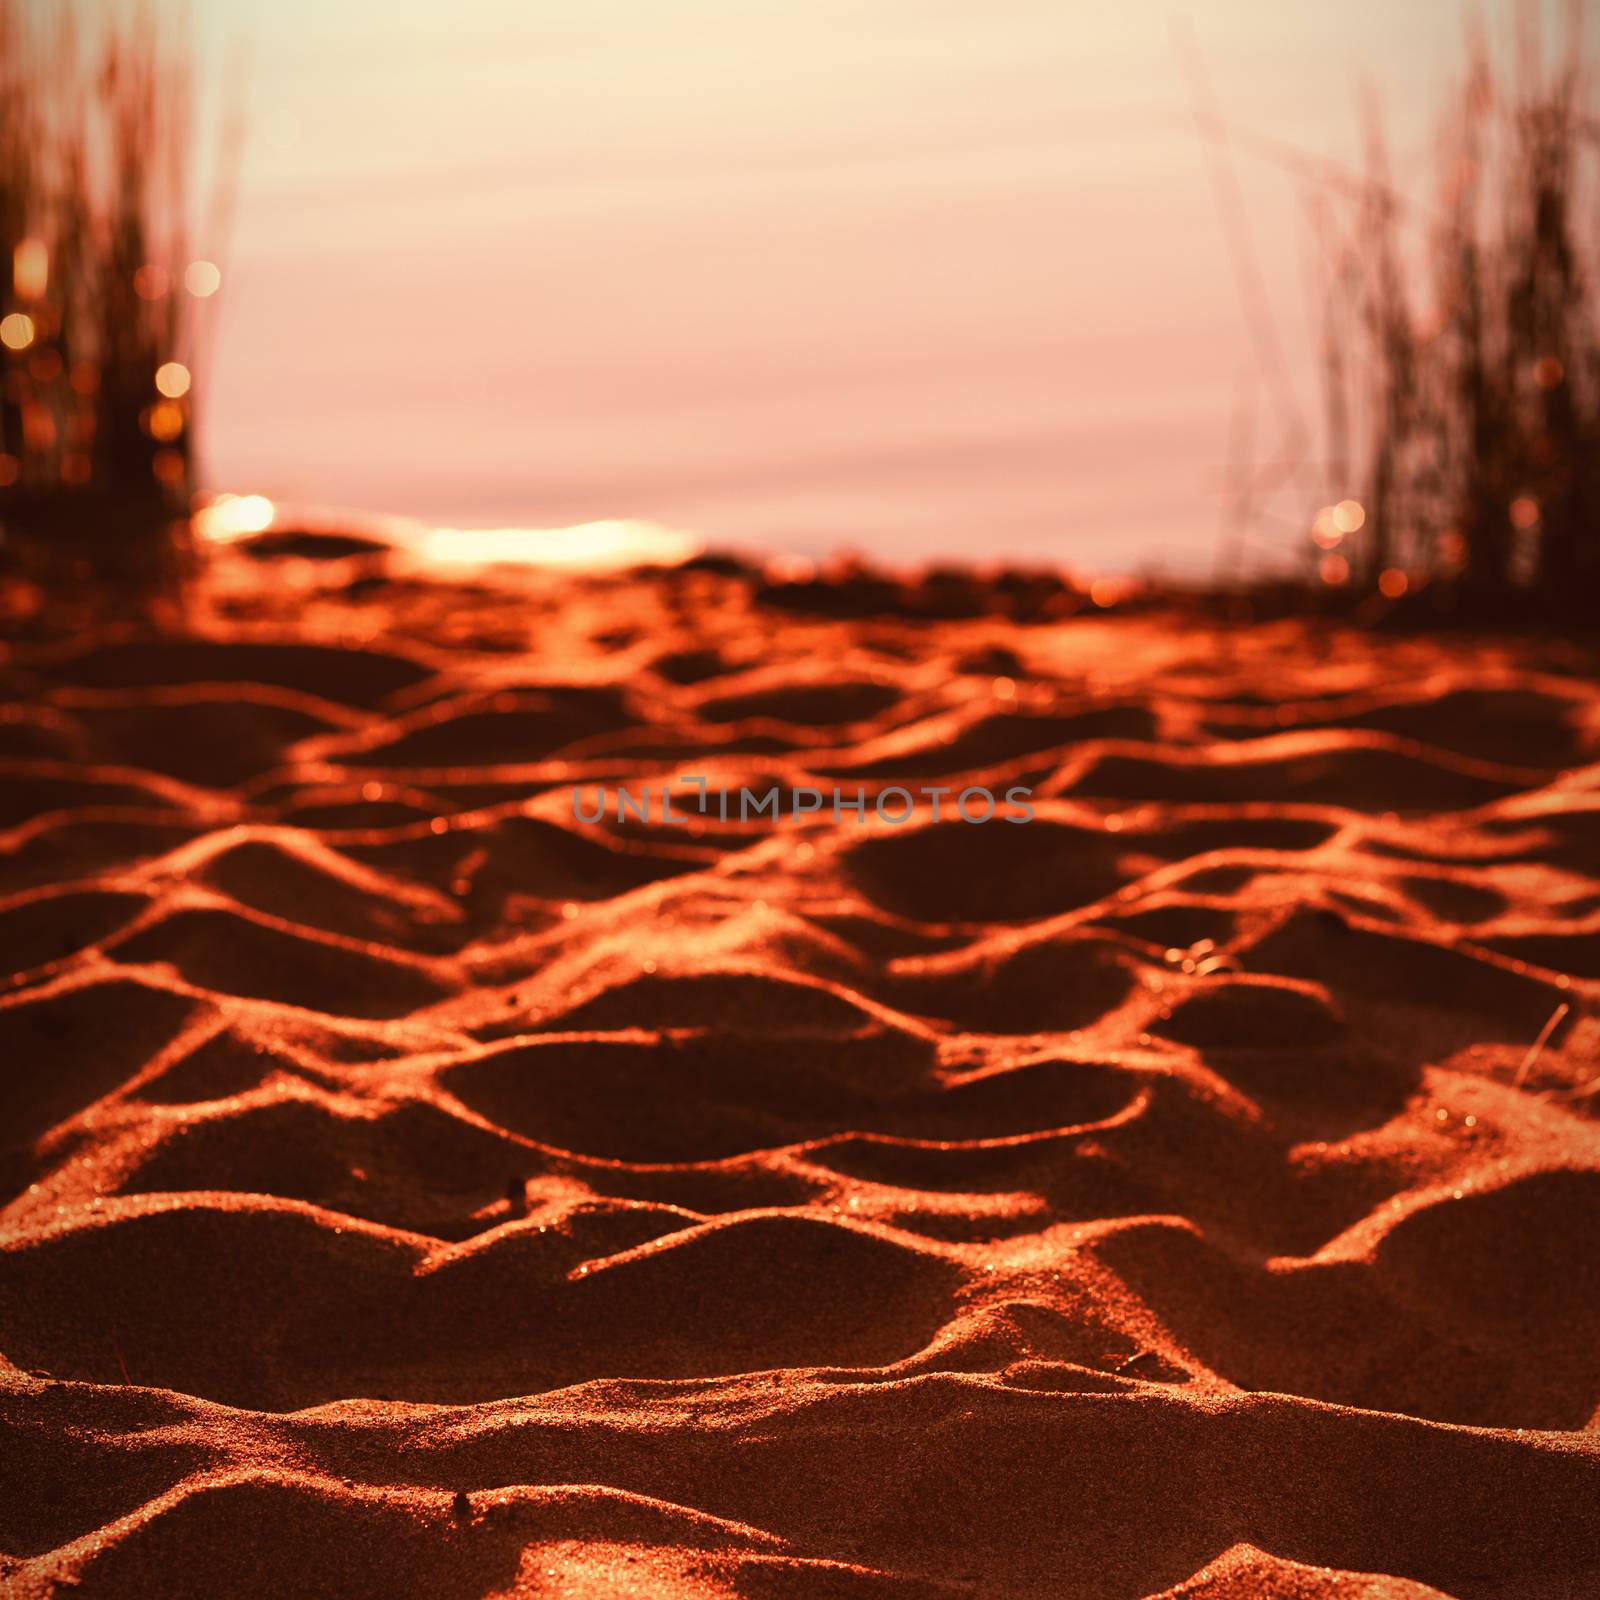 Sand on a sunny day by Wavebreakmedia